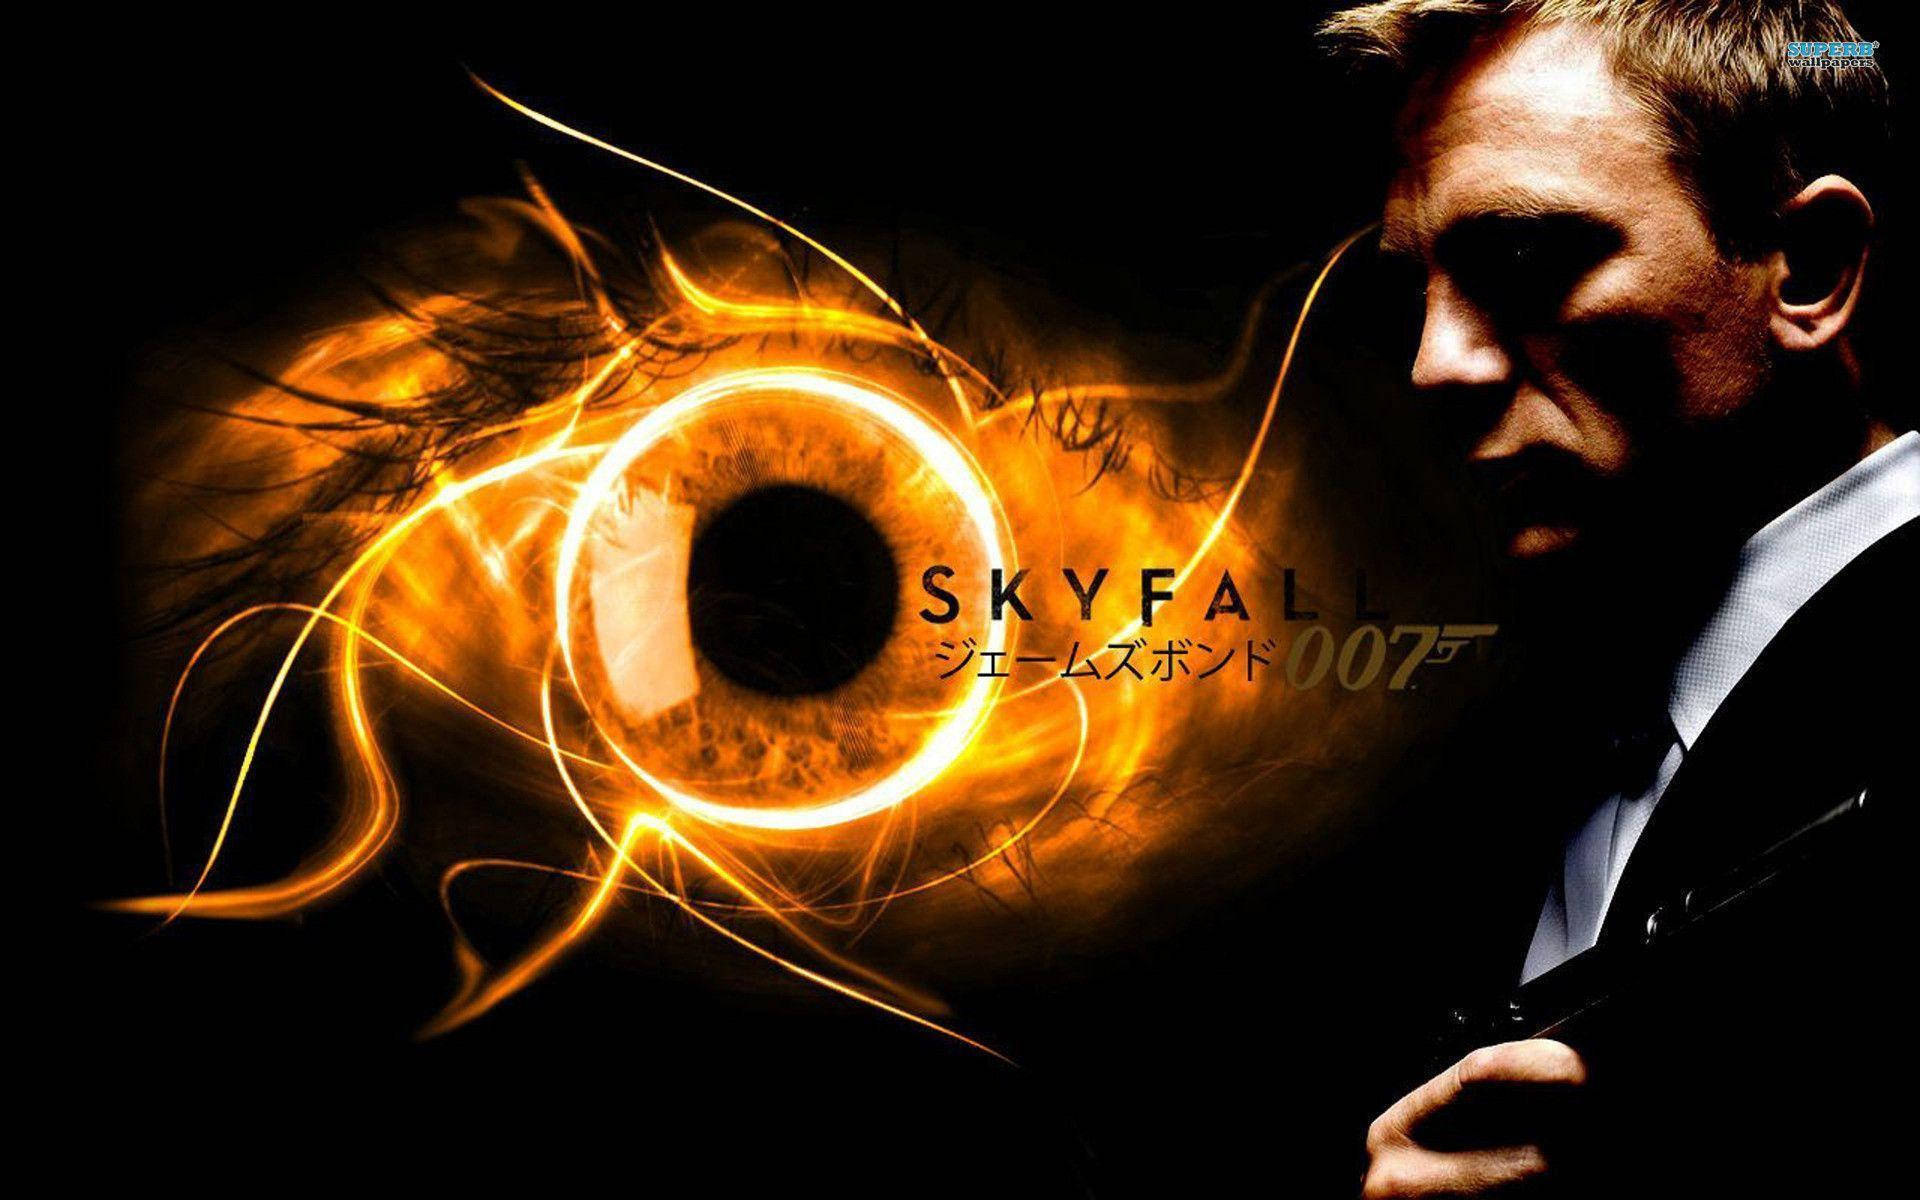 James Bond Skyfall Blazing Poster Background